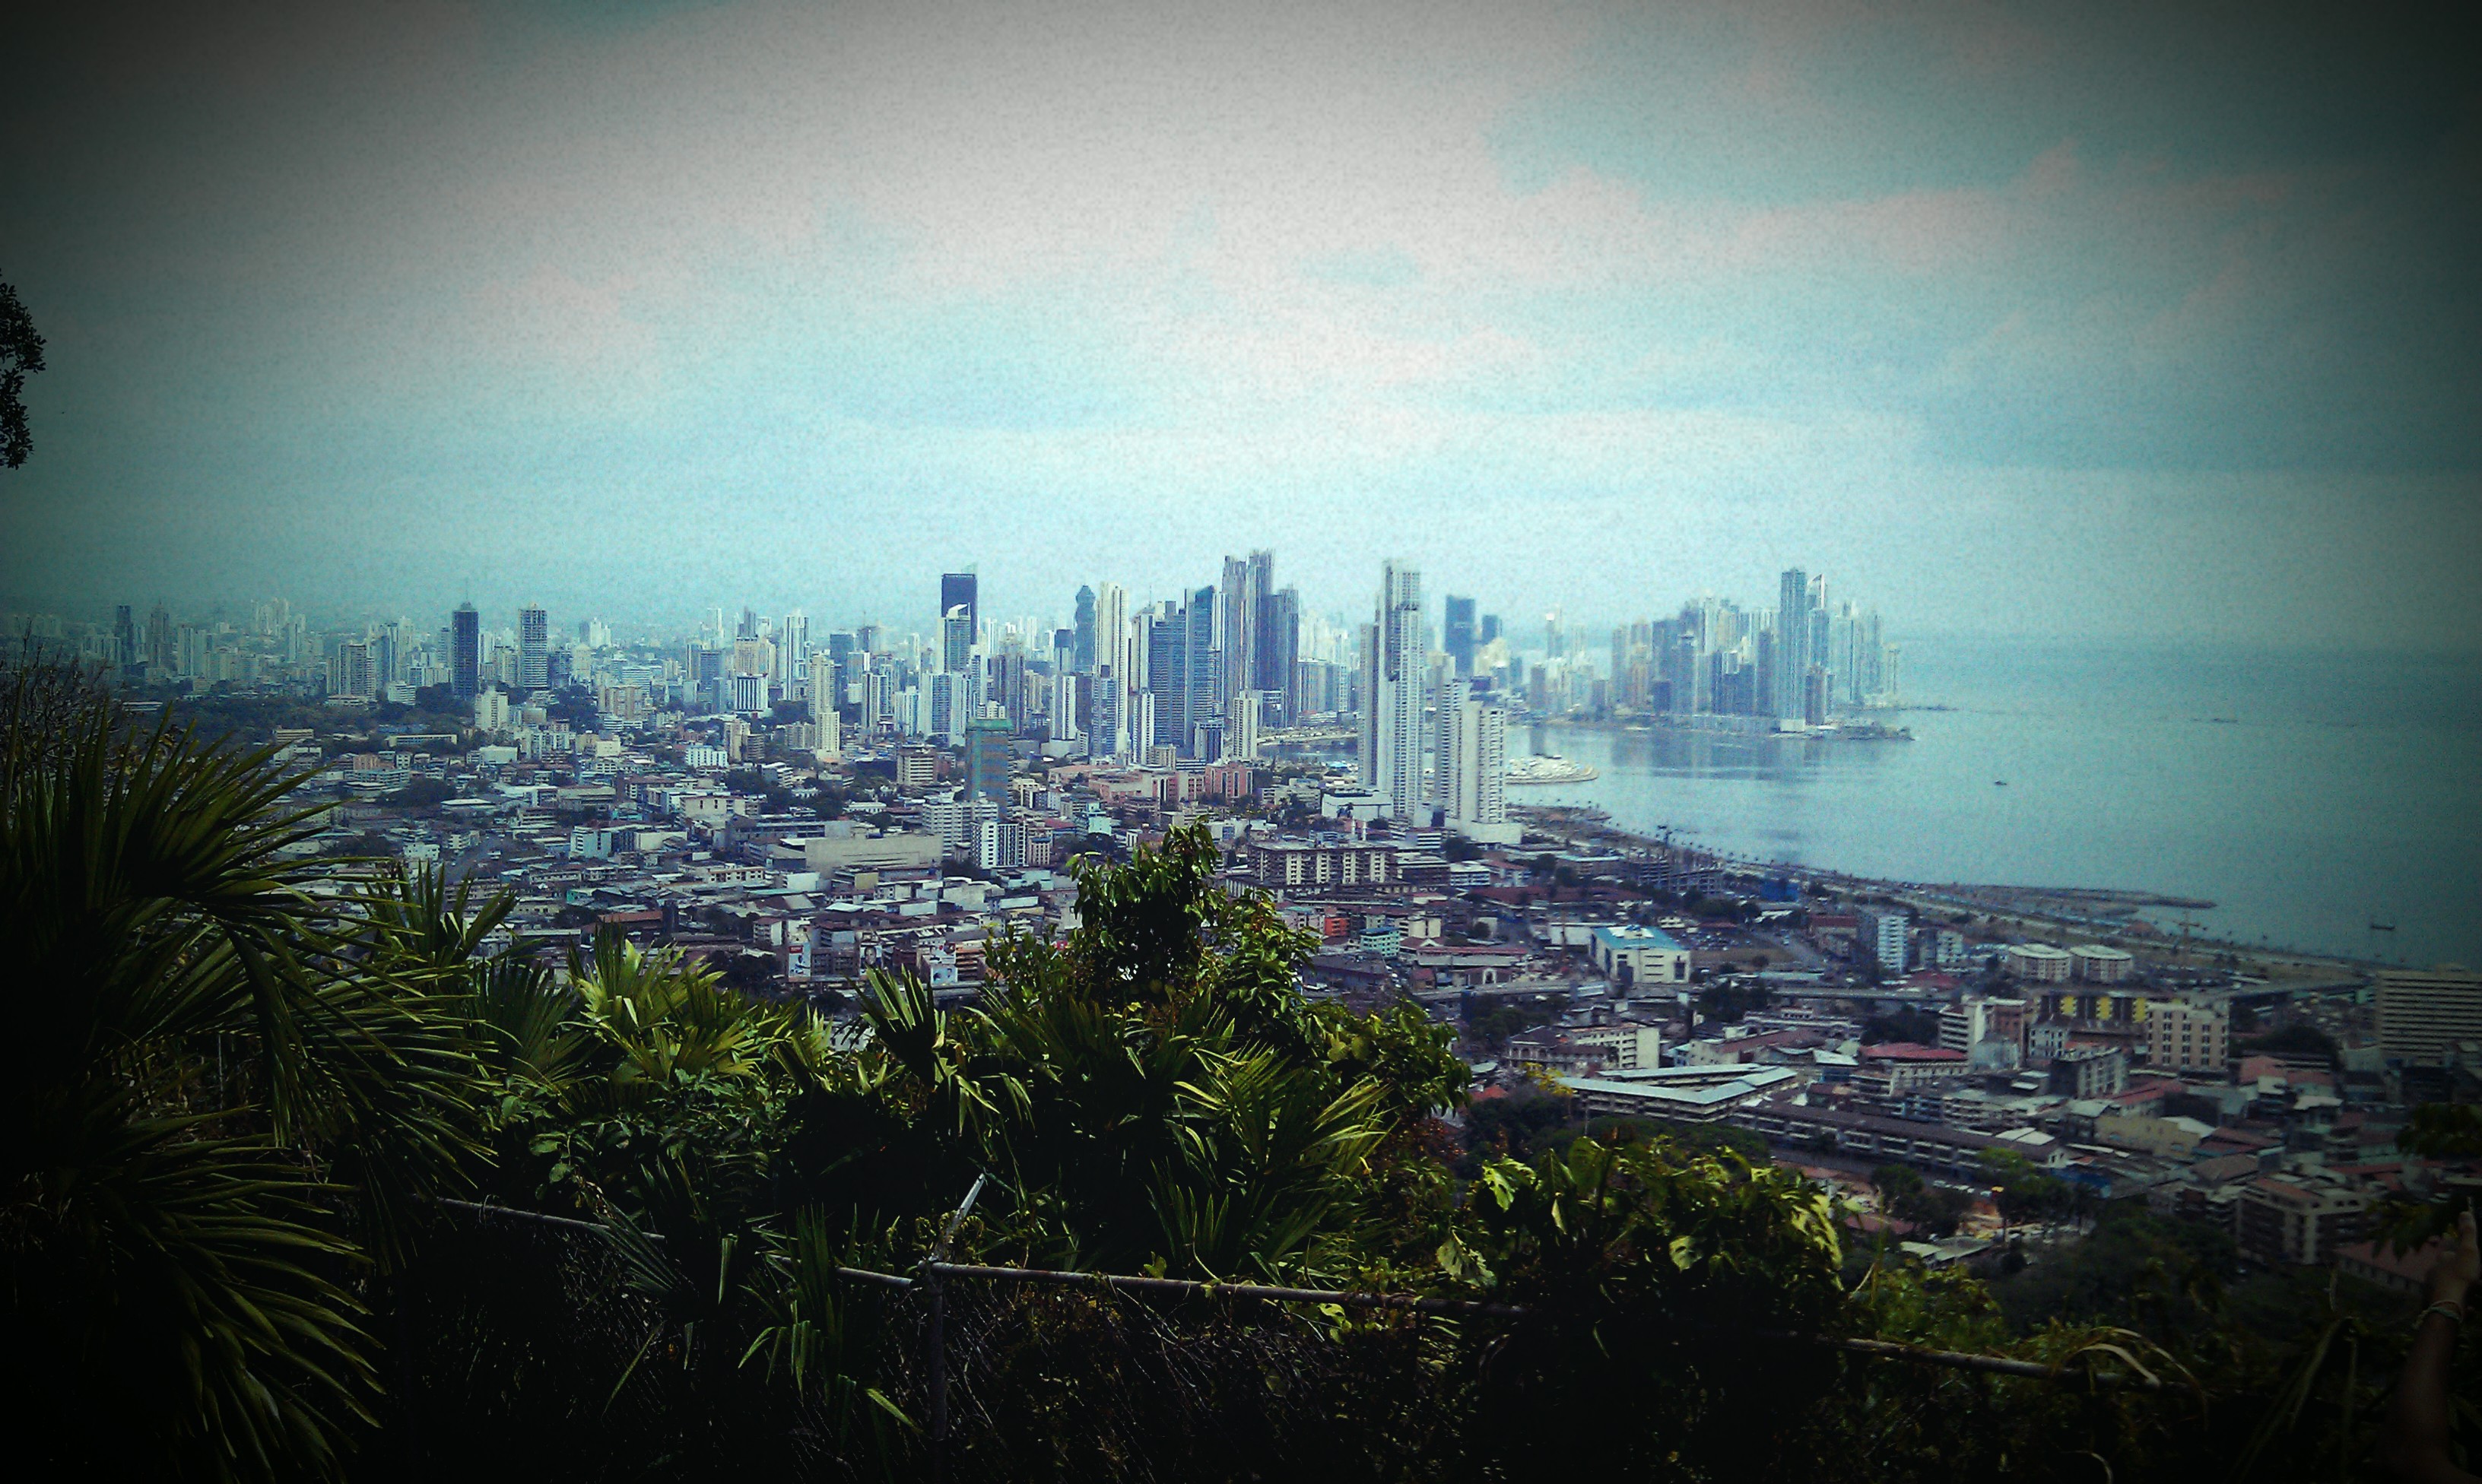 The view from Cerro Ancon in Panama City